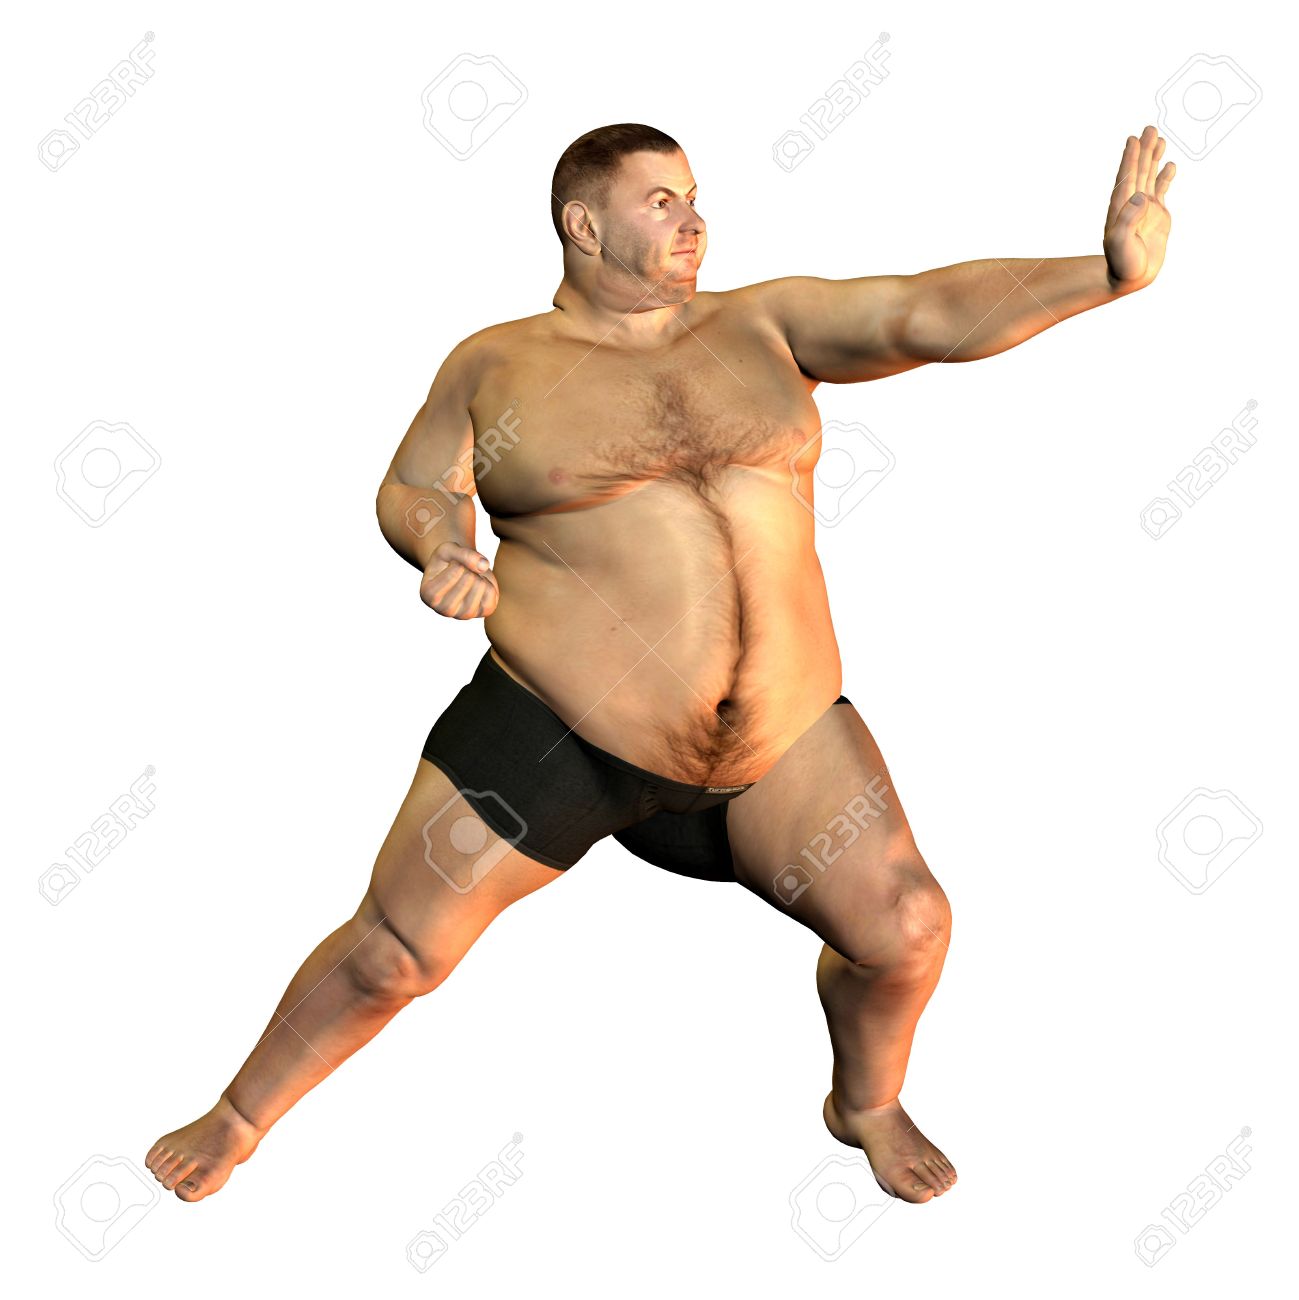 beatriz blanca barttolotti recommends fat guy sexy pose pic